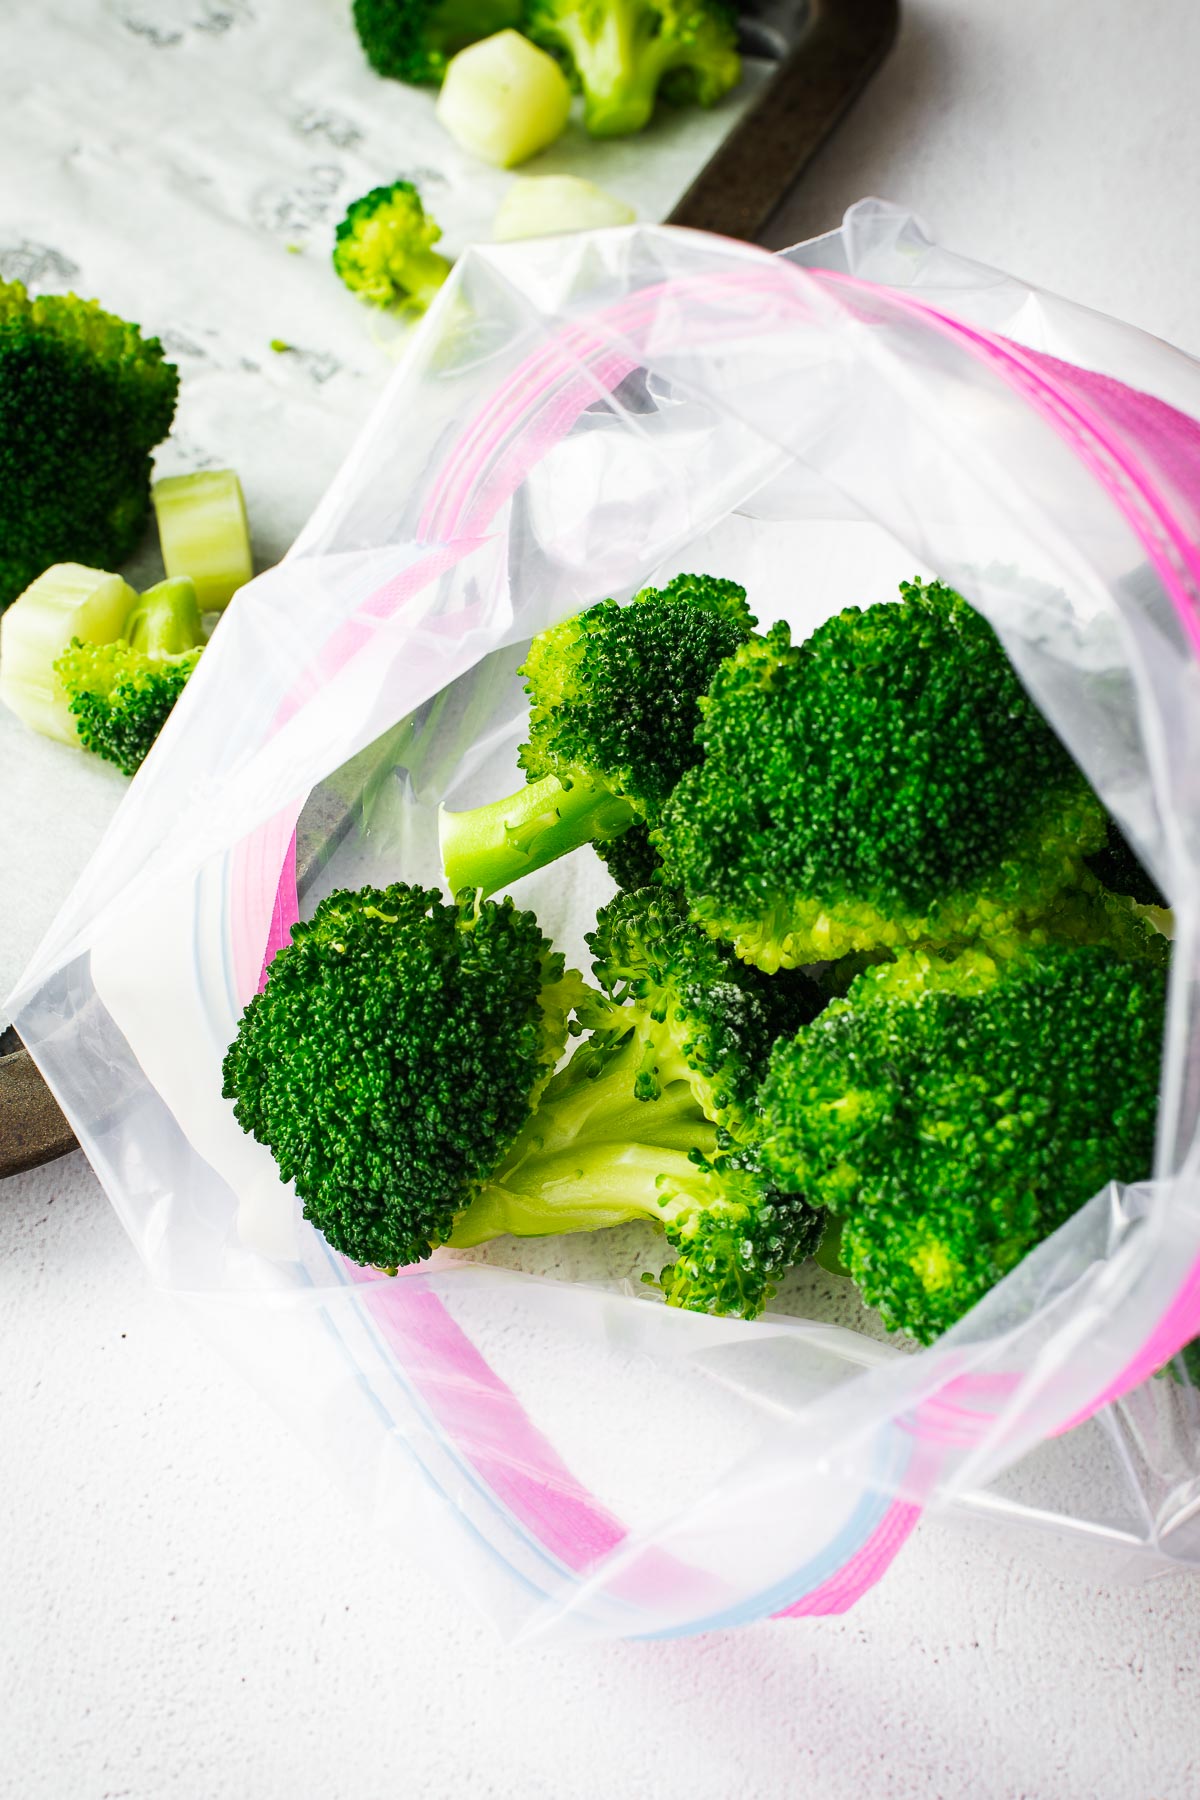 Placing flash frozen broccoli florets in a clean freezer bag.